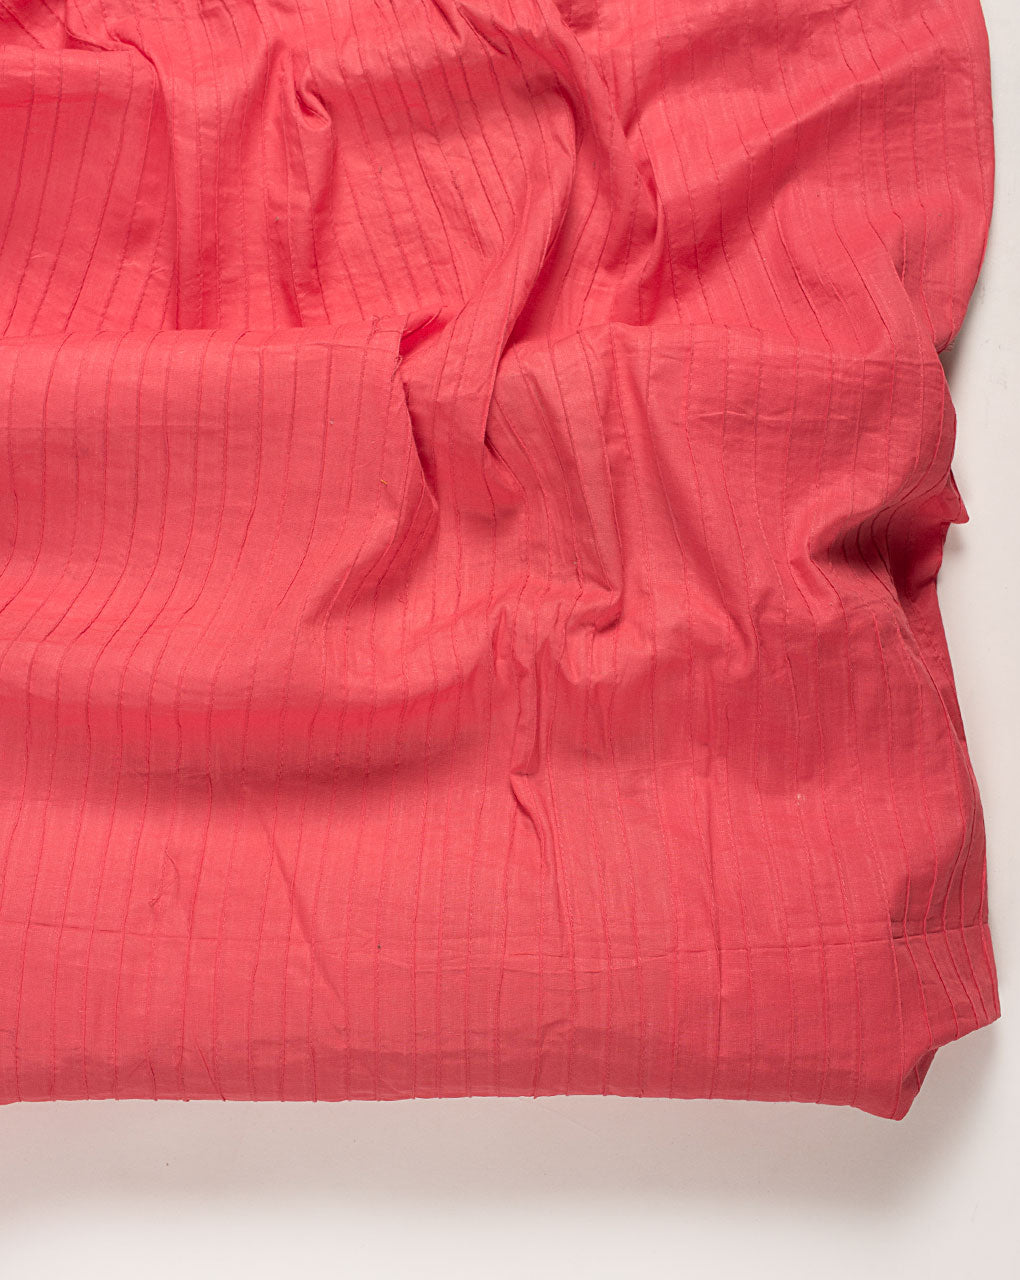 Salmon Pin-Tucks Cotton Fabric